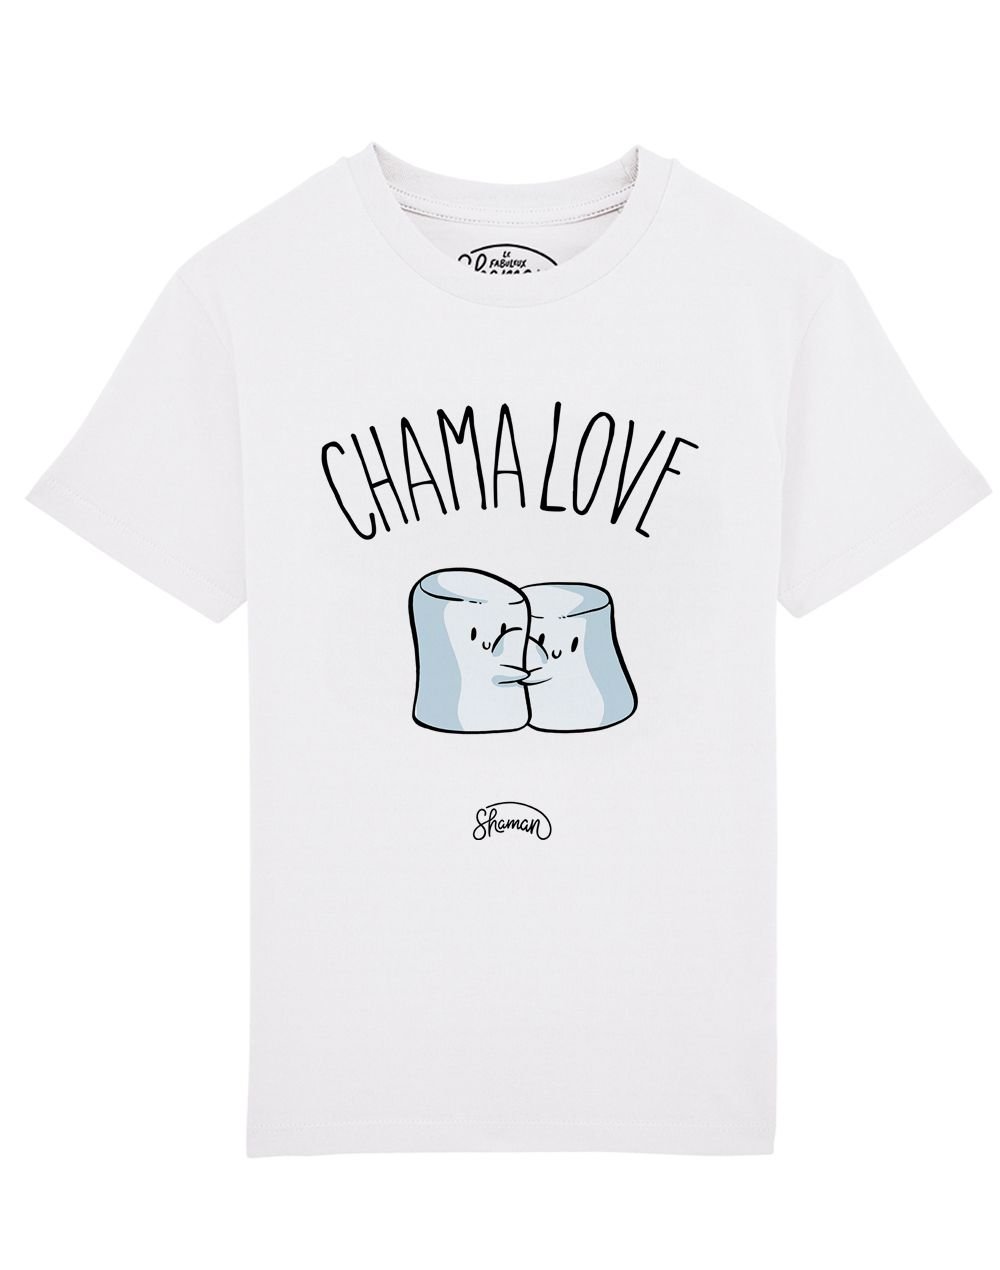 Tee shirt Chamallove